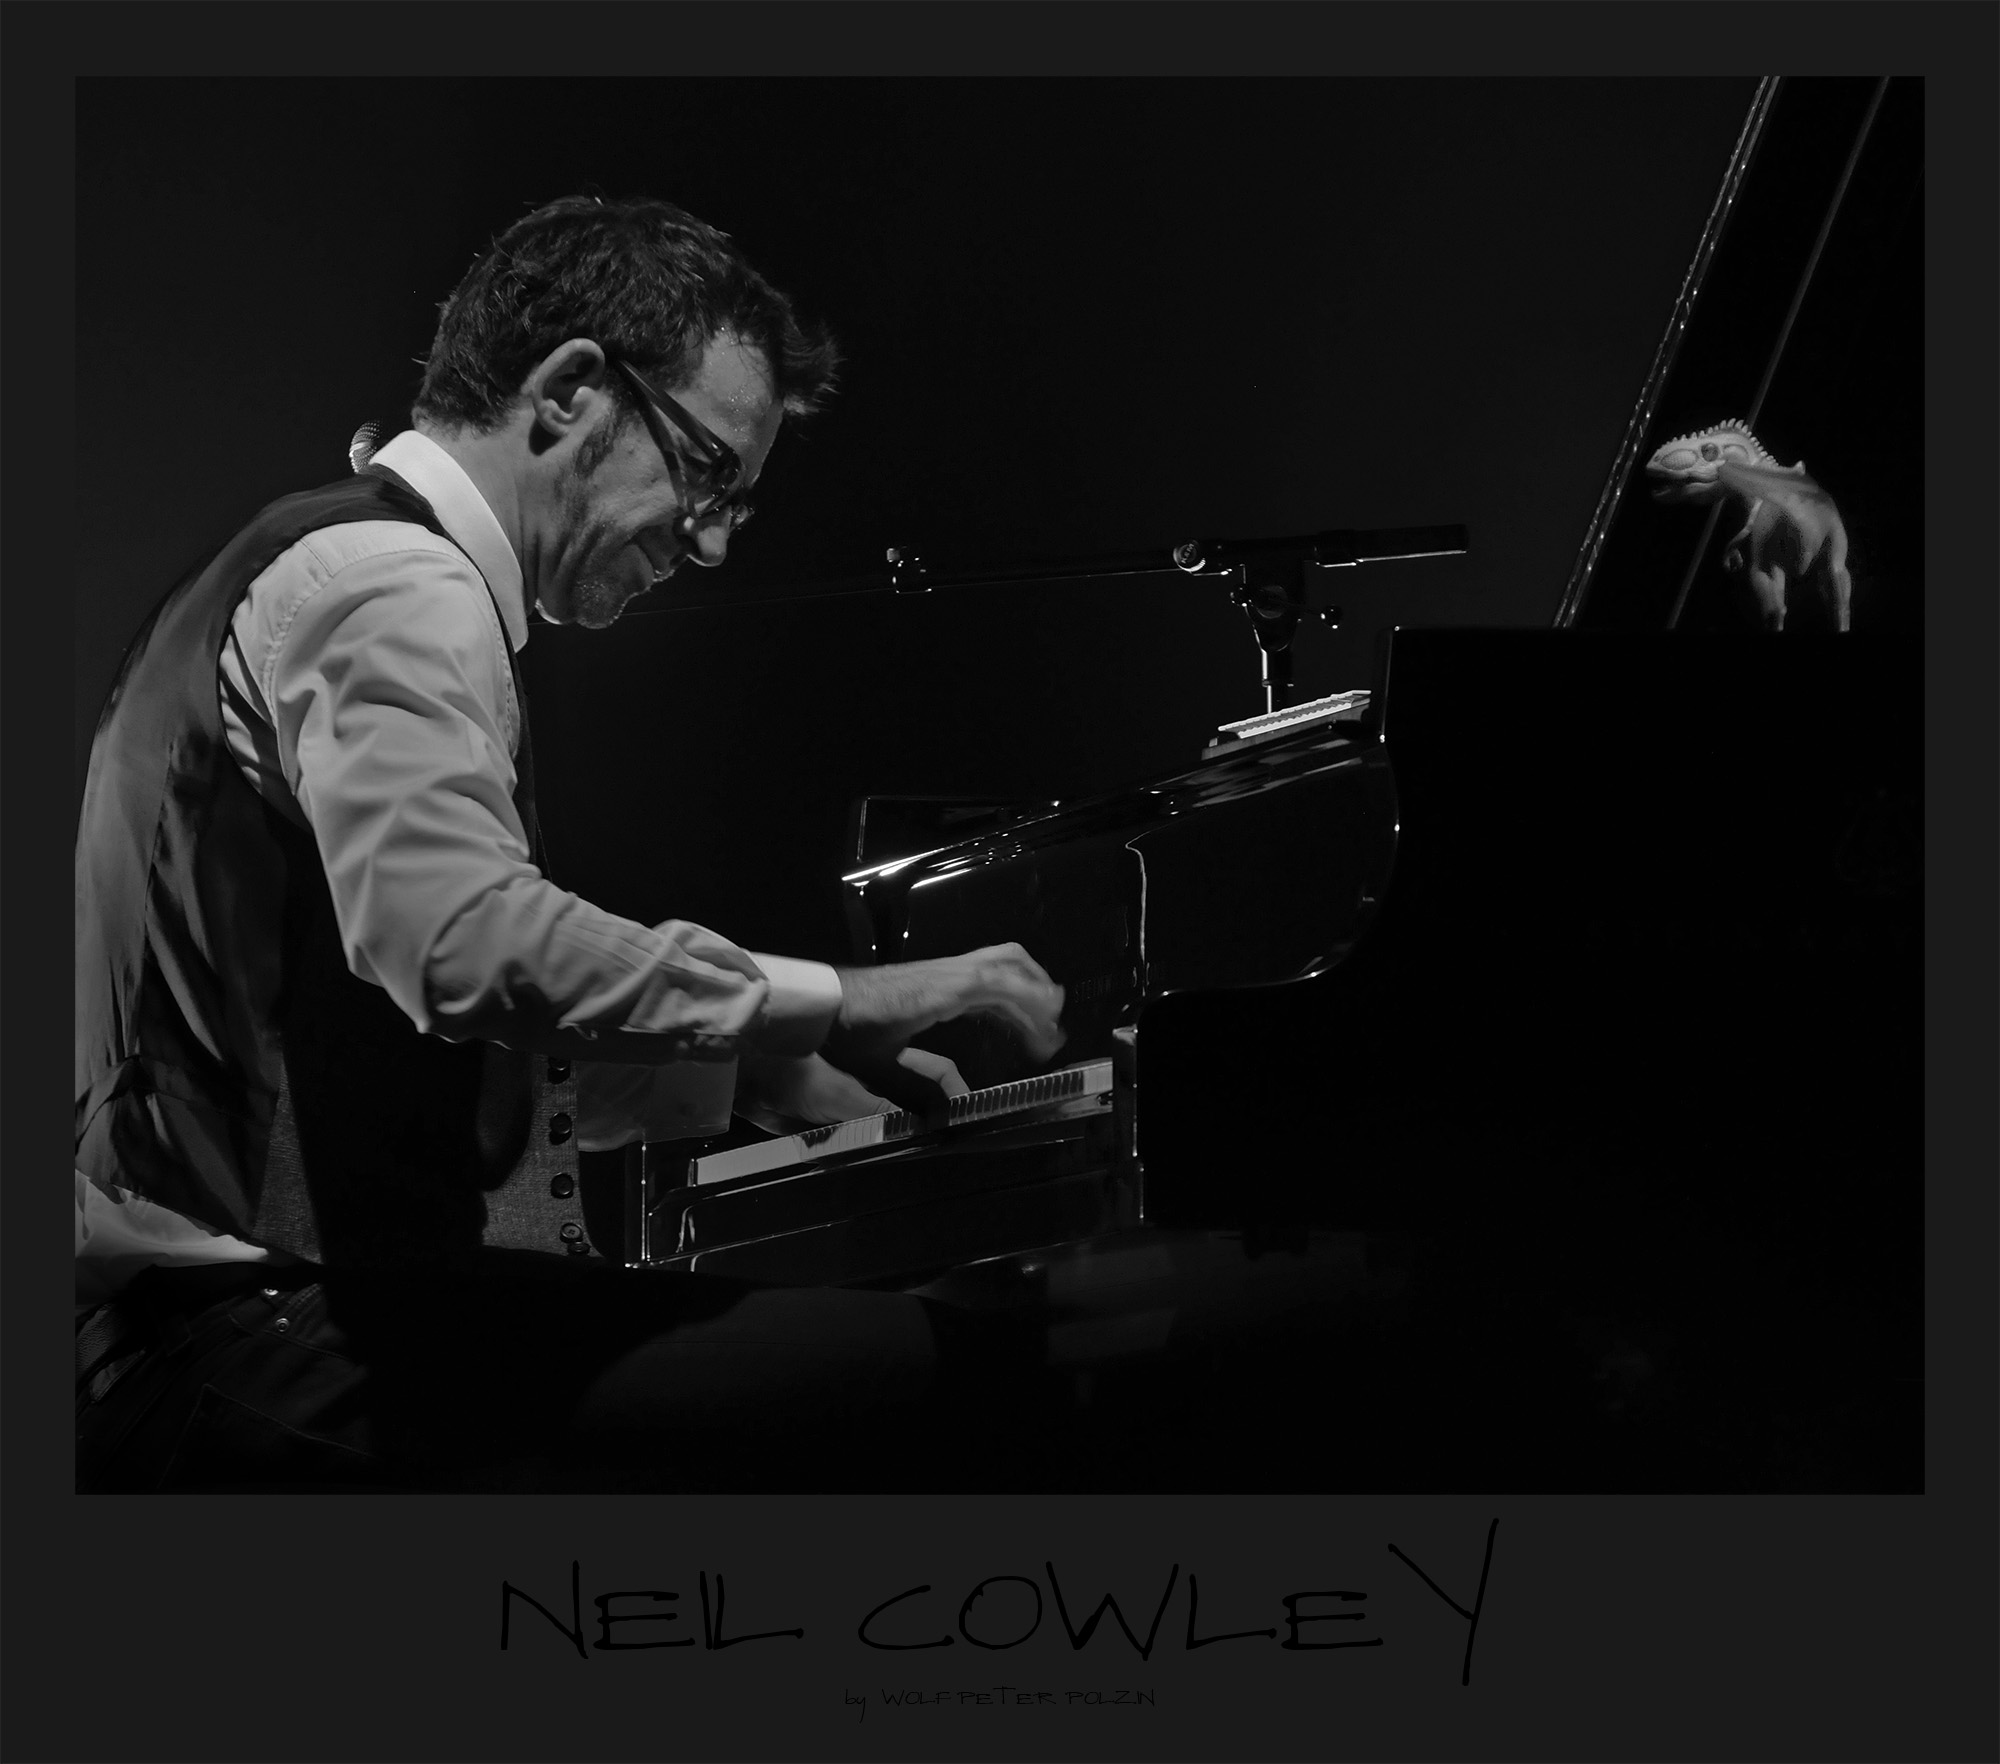 Neil Cowley